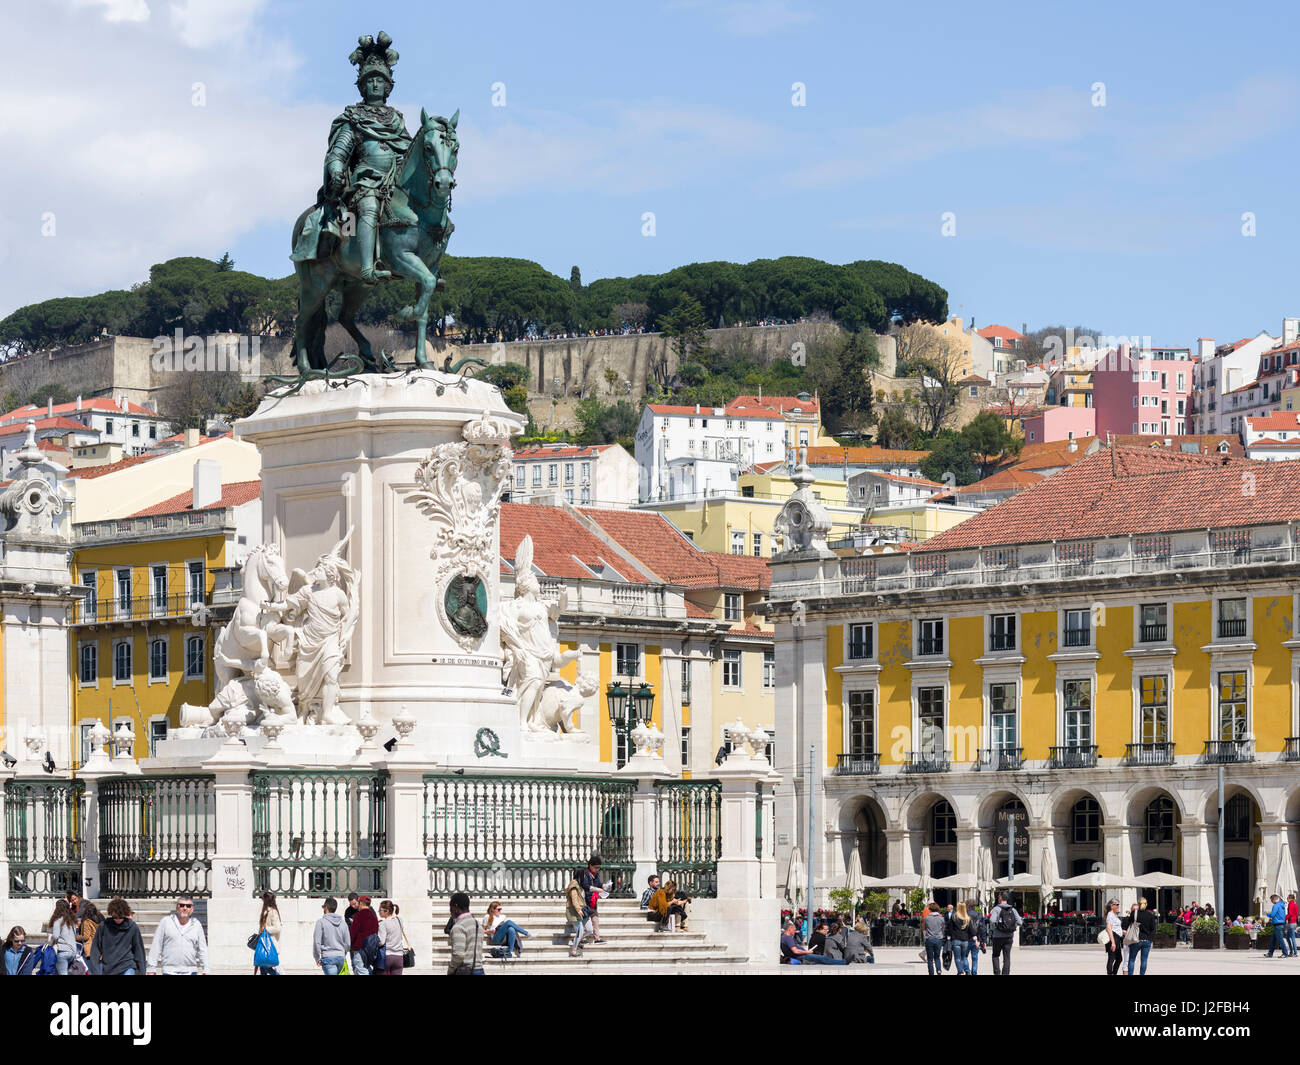 The statue of Dom Jose I at the square Praca do Comerico. Castelo de Sao Jorge in the background. Lisbon (Lisboa) the capital of Portugal. Stock Photo